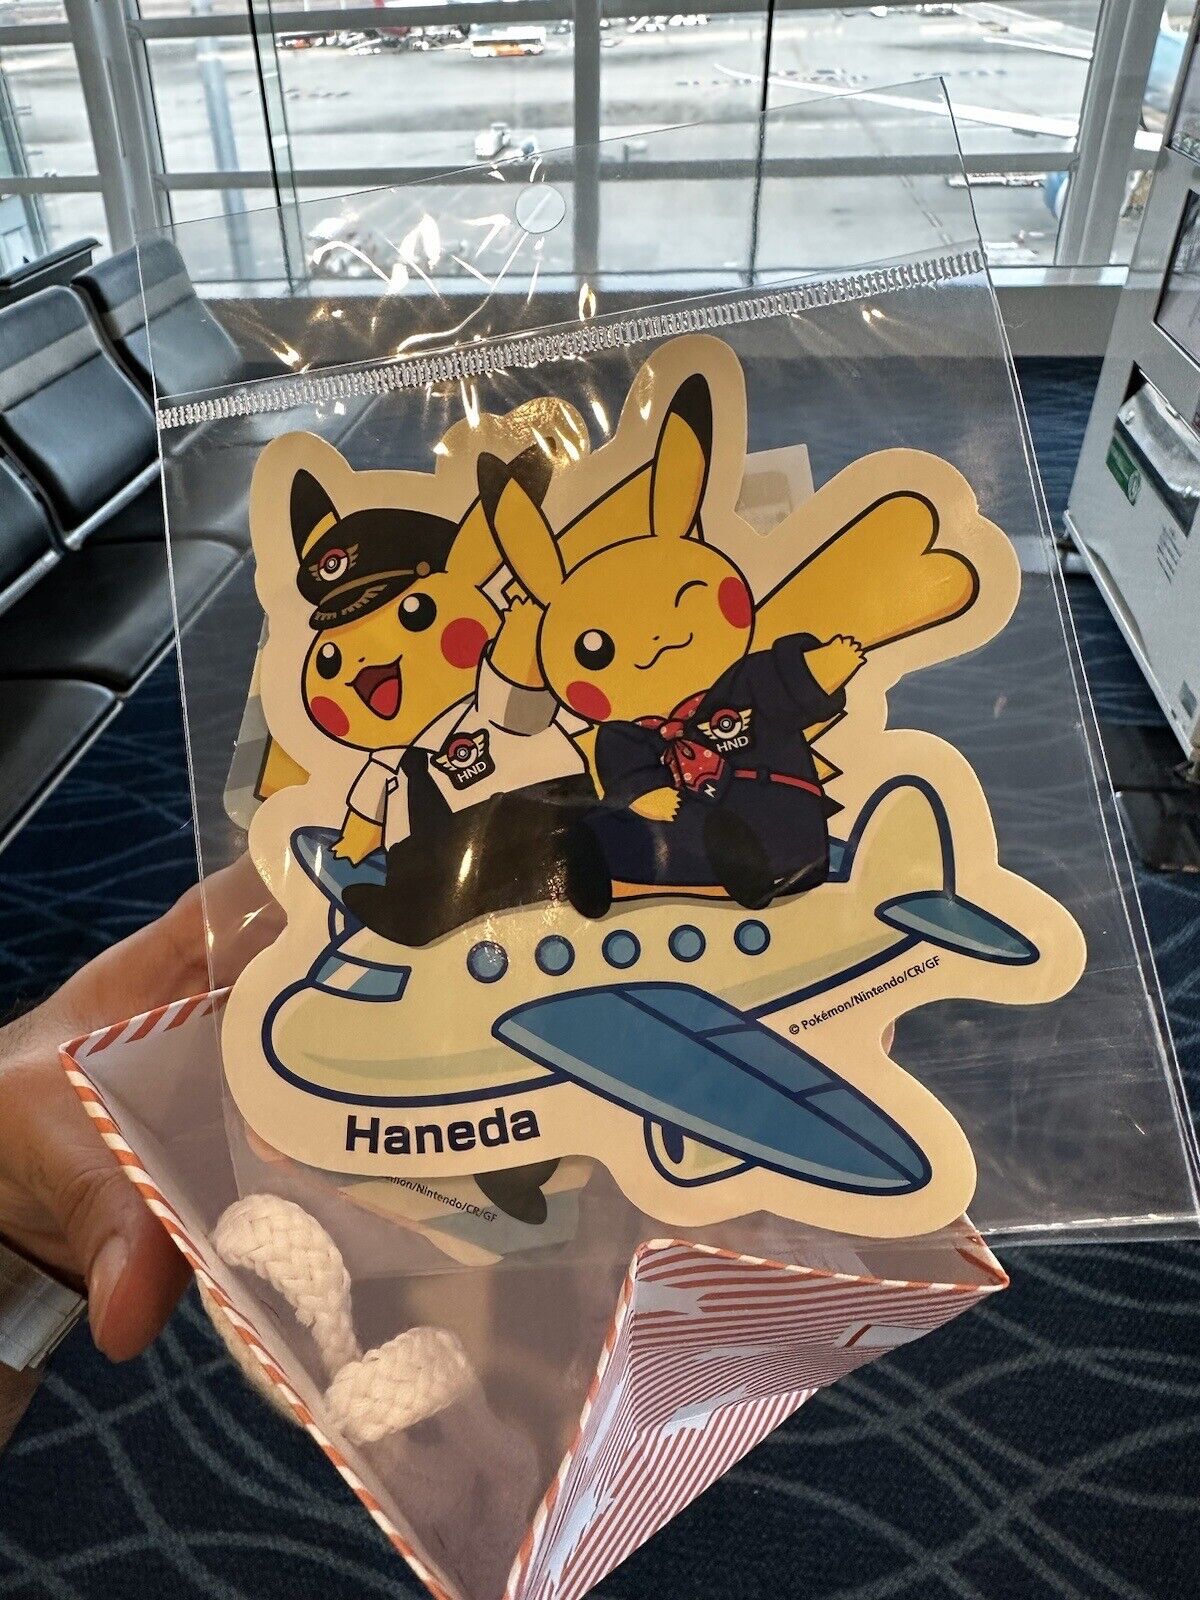 Pokemon Haneda Airport HND Limited Edition Pilot Pikachu Sticker Pack Of 3 NEW